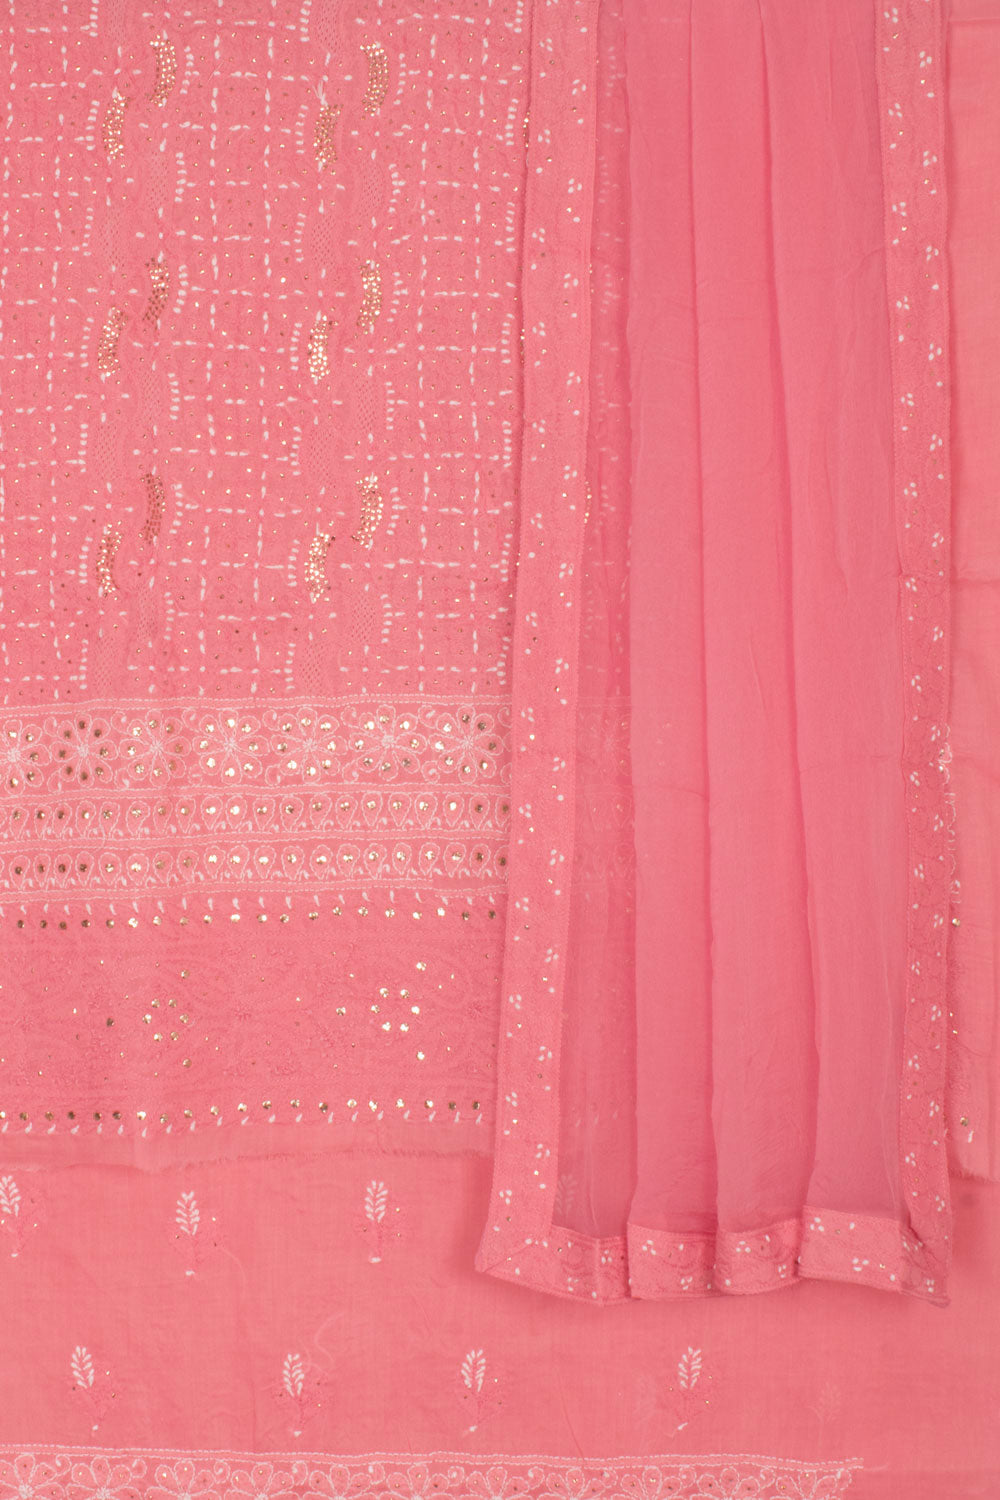 Hand Embroidered Chikankari Cotton 3-Piece Salwar Suit Material with Mukaish Work and Chiffon Dupatta